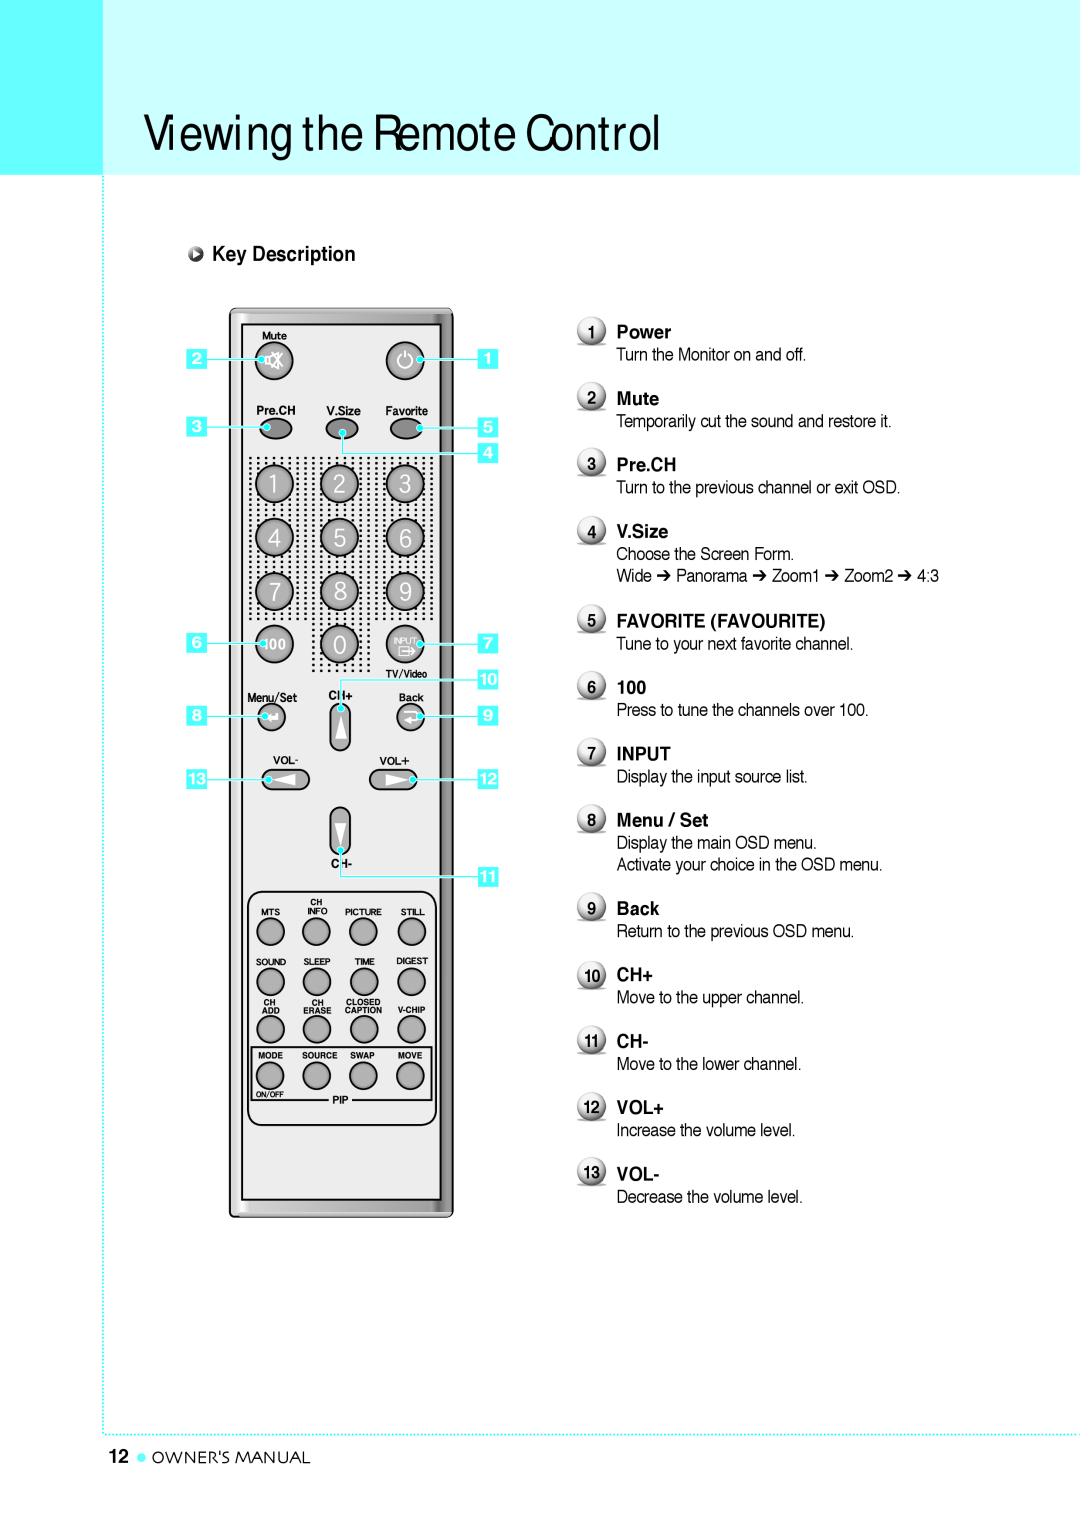 InFocus TD40 NTSC, TD32 manual Viewing the Remote Control, Key Description 